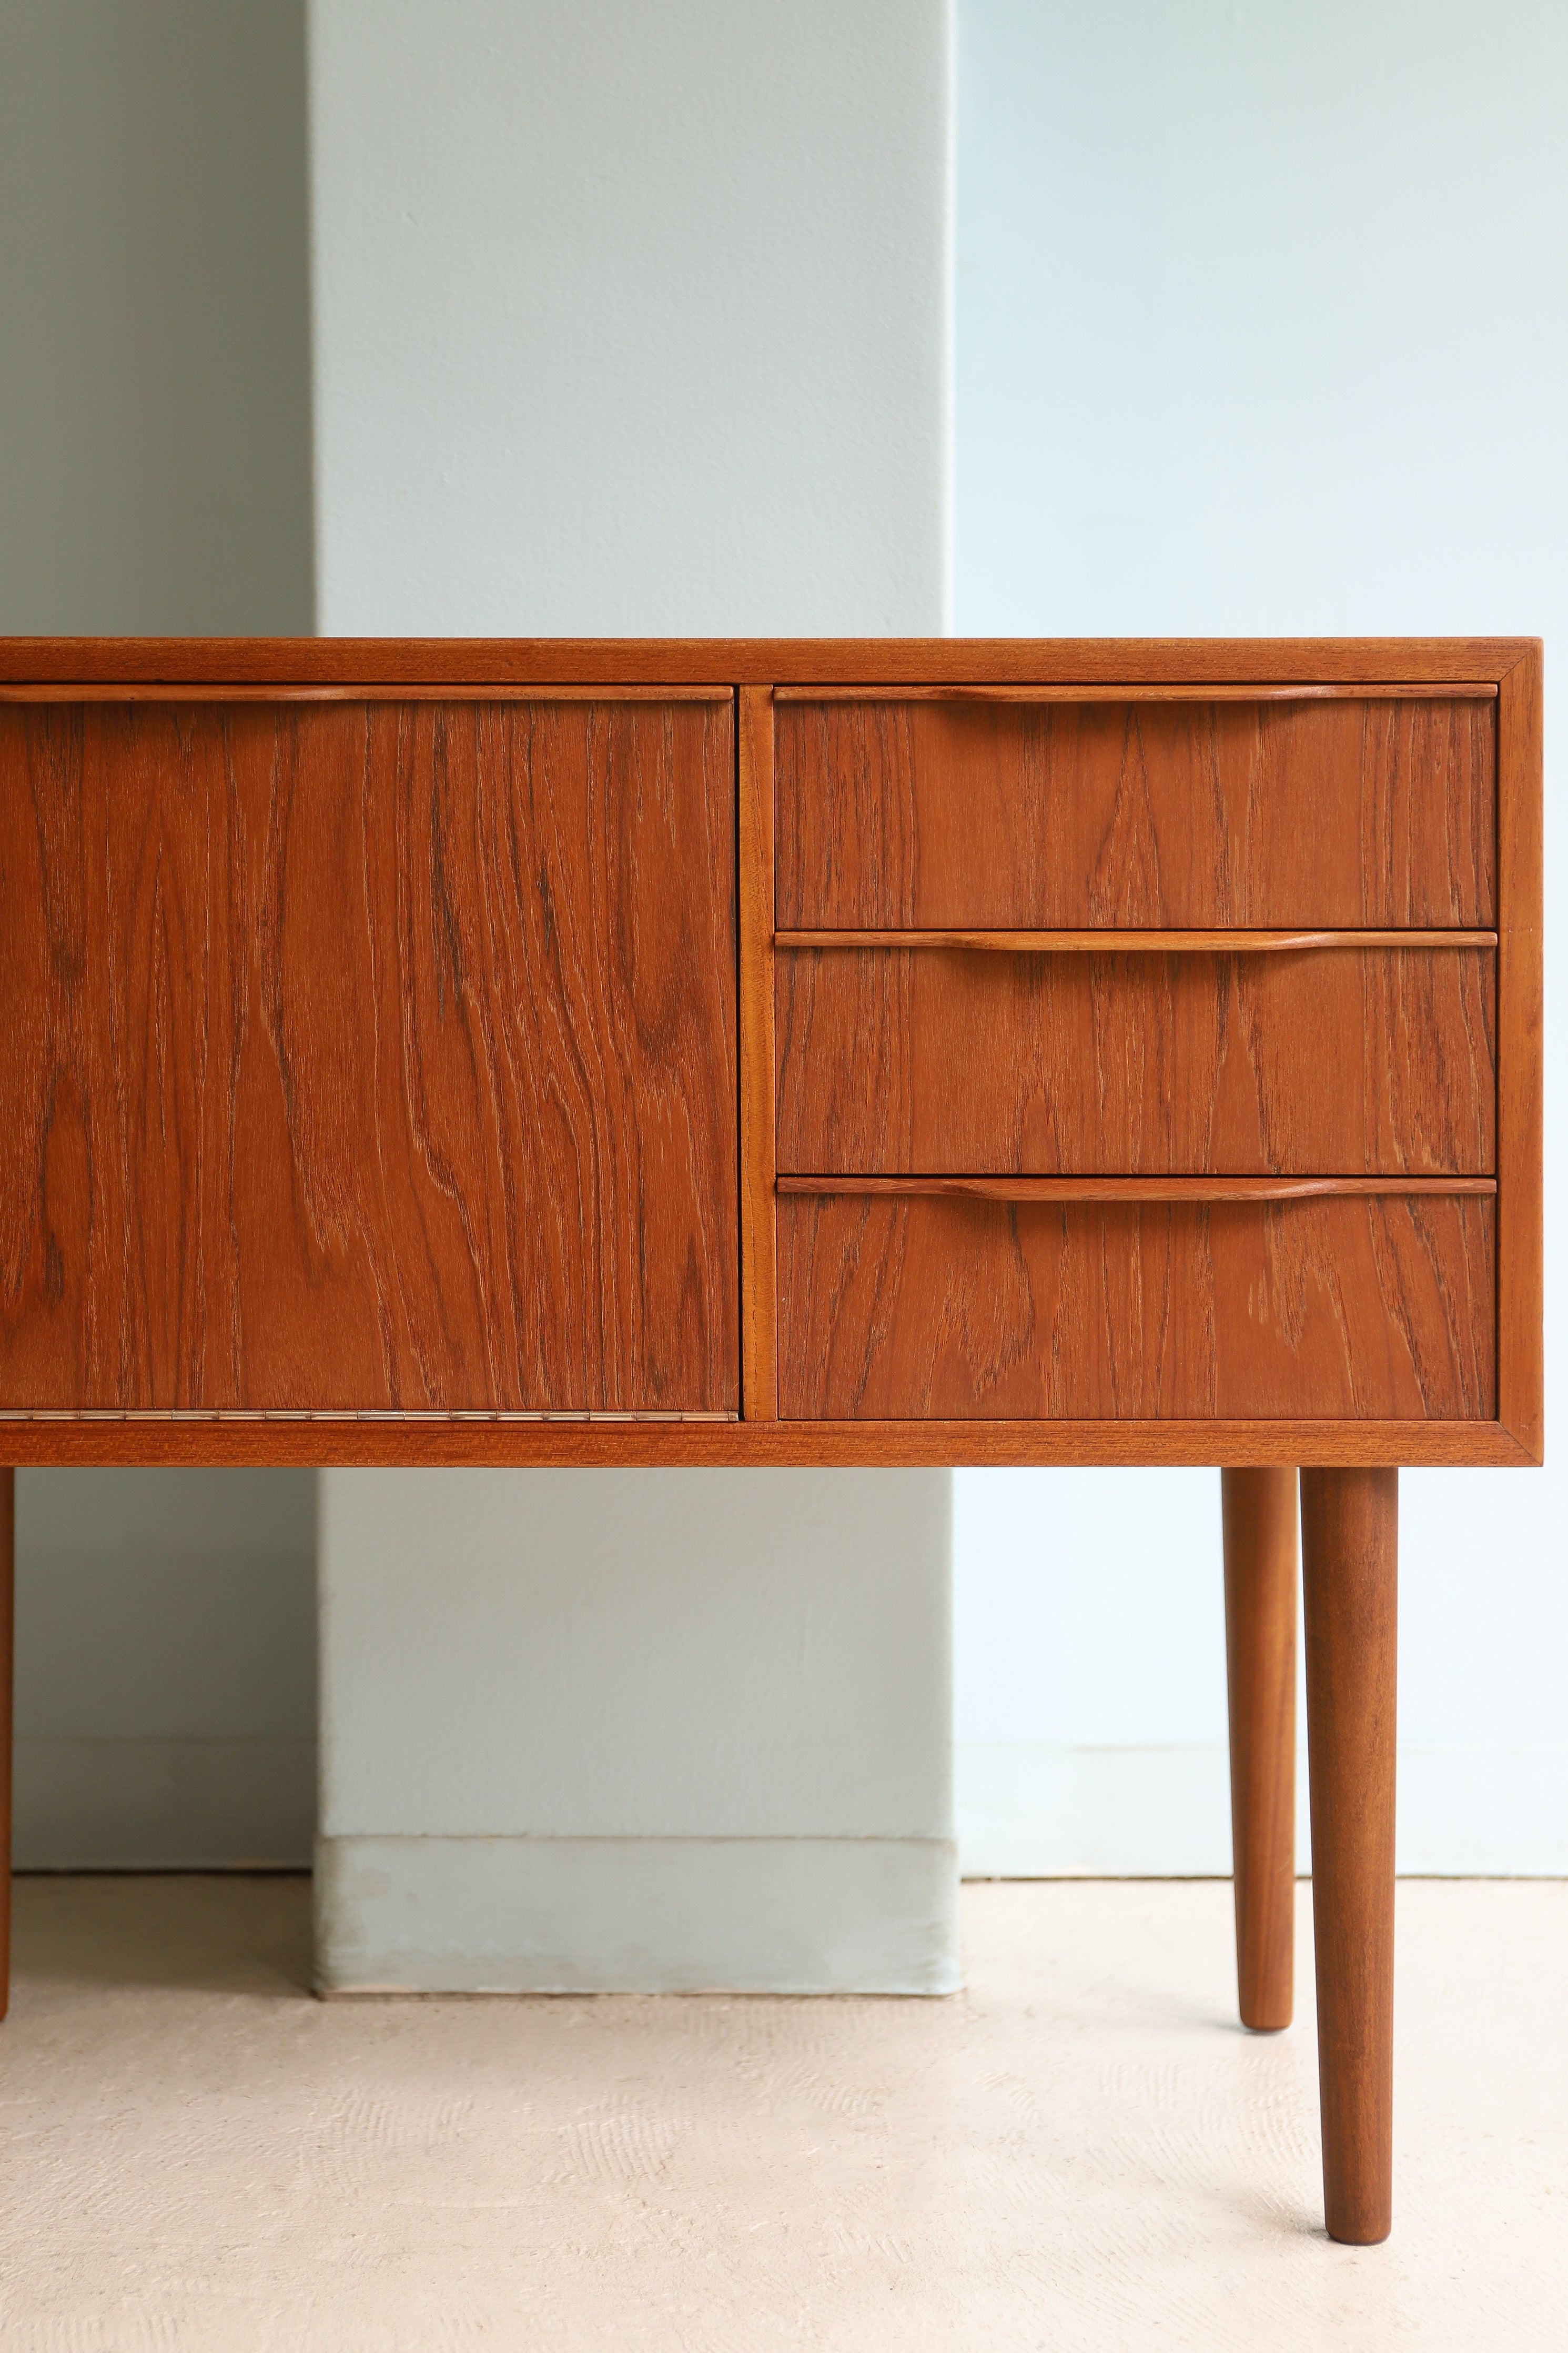 Danish Vintage Small Cabinet Chest Teakwood/デンマークヴィンテージ スモールキャビネット チェスト チーク材 北欧家具